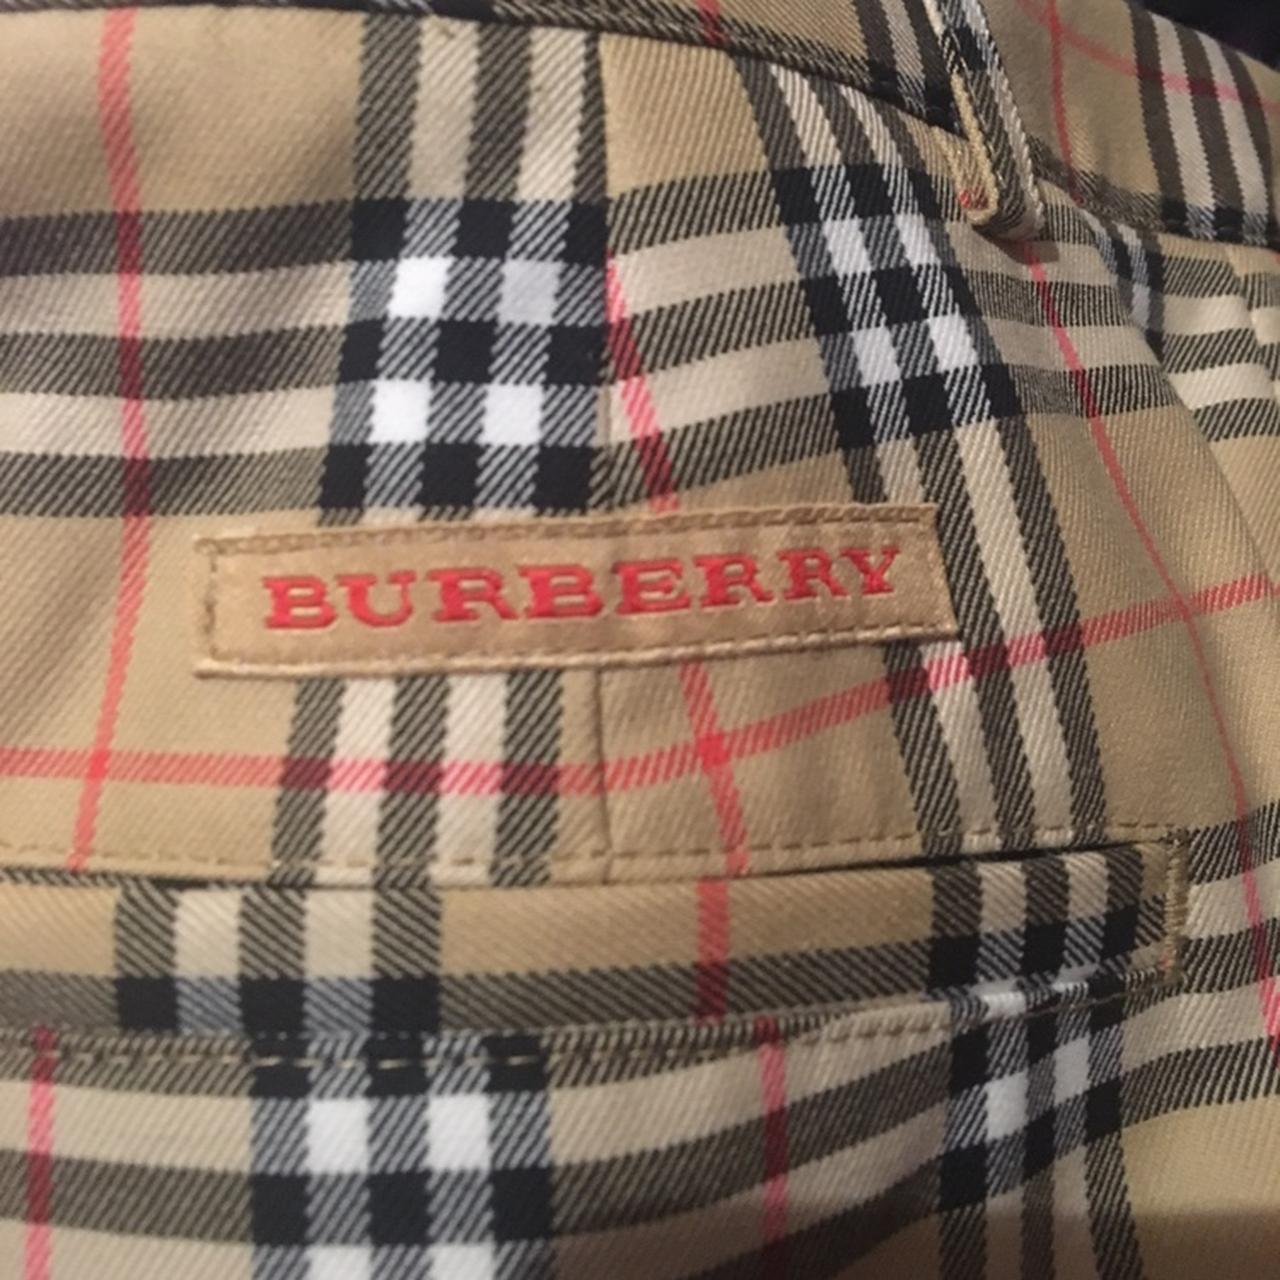 Burberry Golf Apparel  Mercari